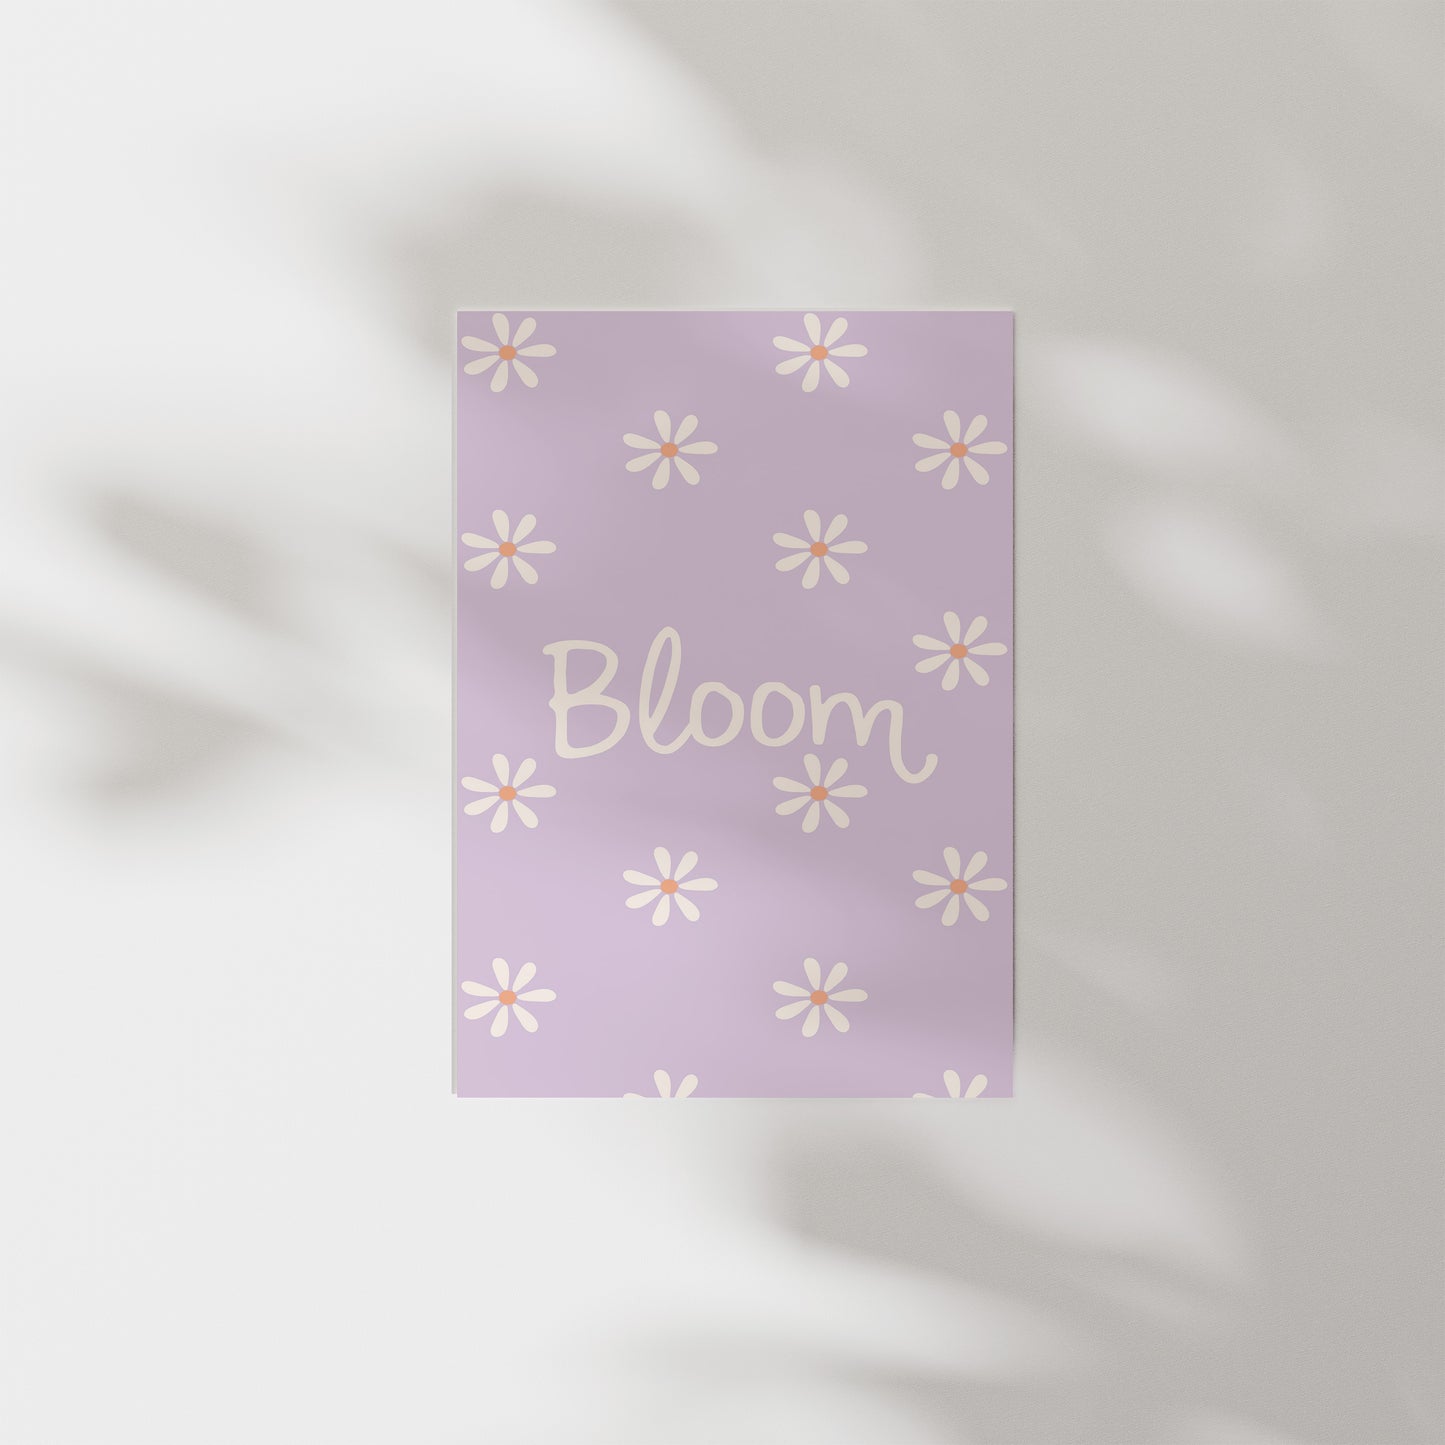 Bloom Digital Art Print